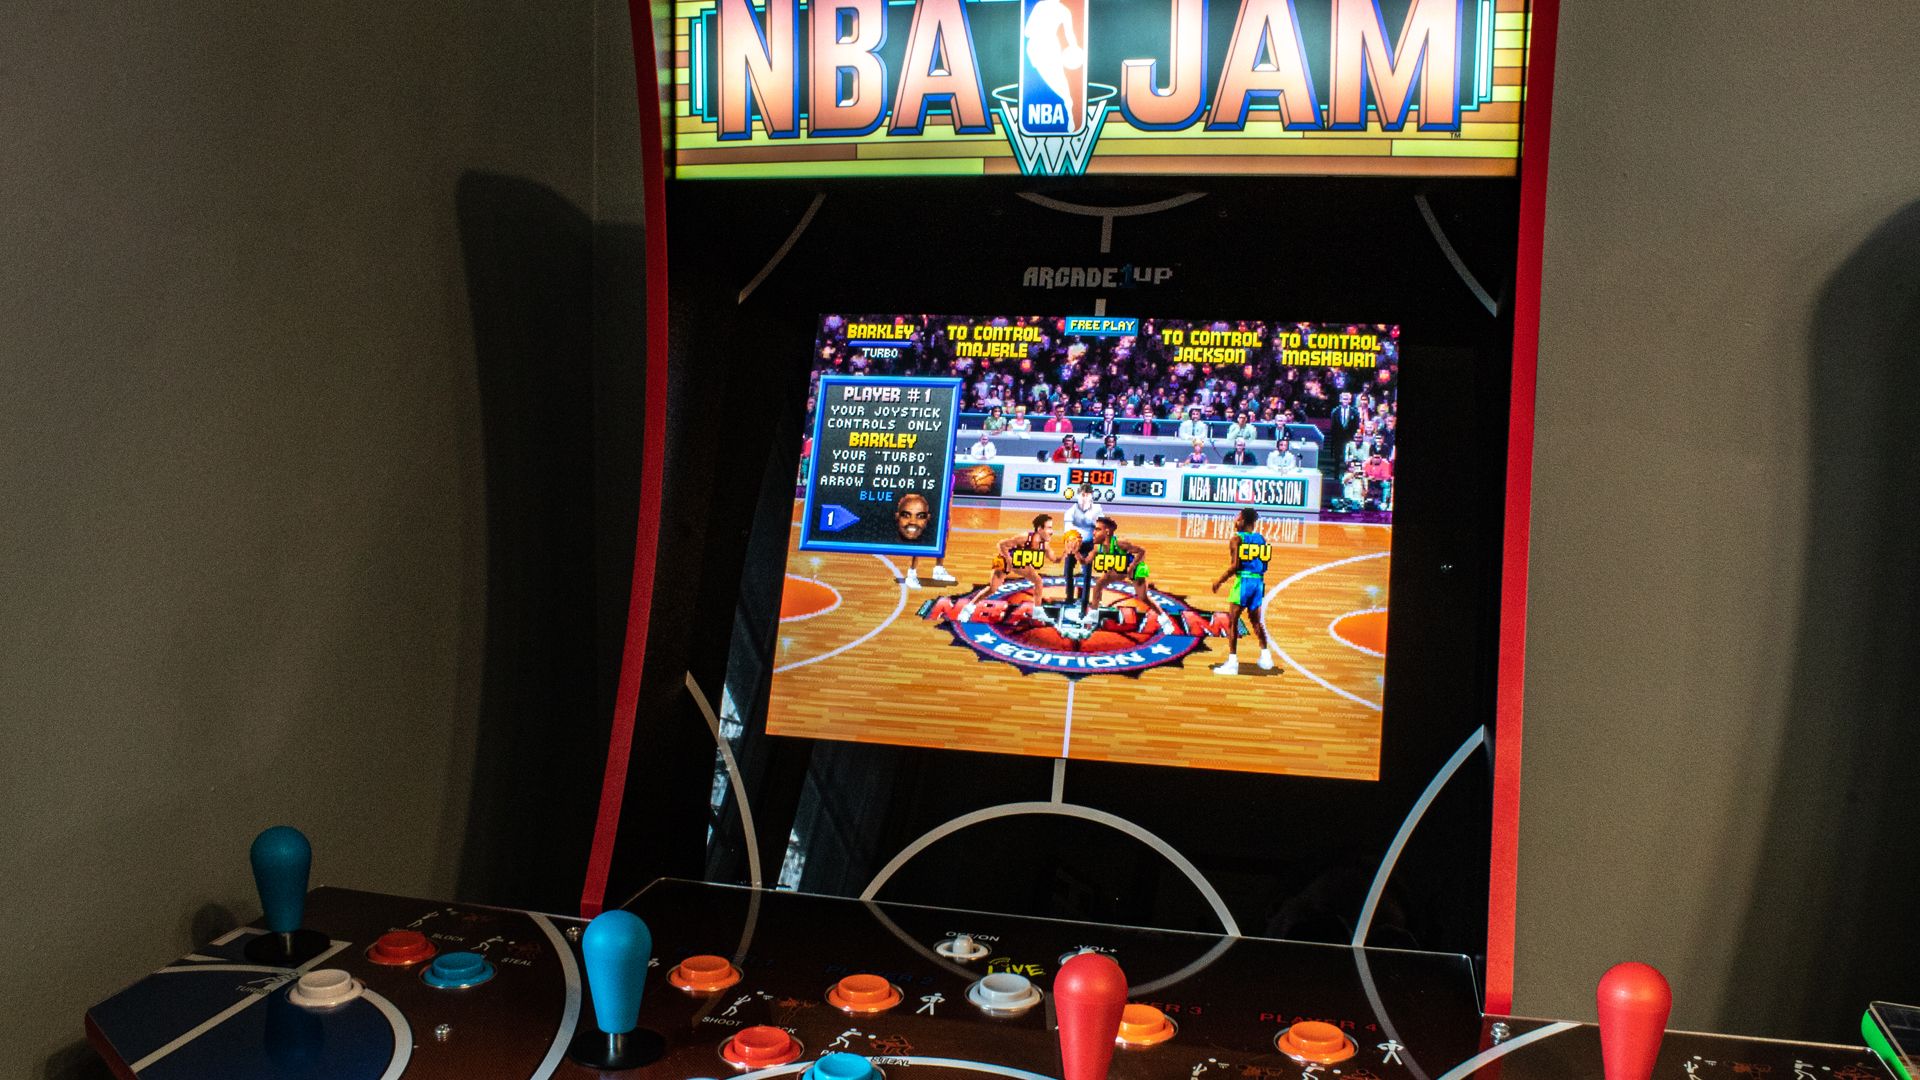 A closeup shot of the NBA Jam machine playing a game.